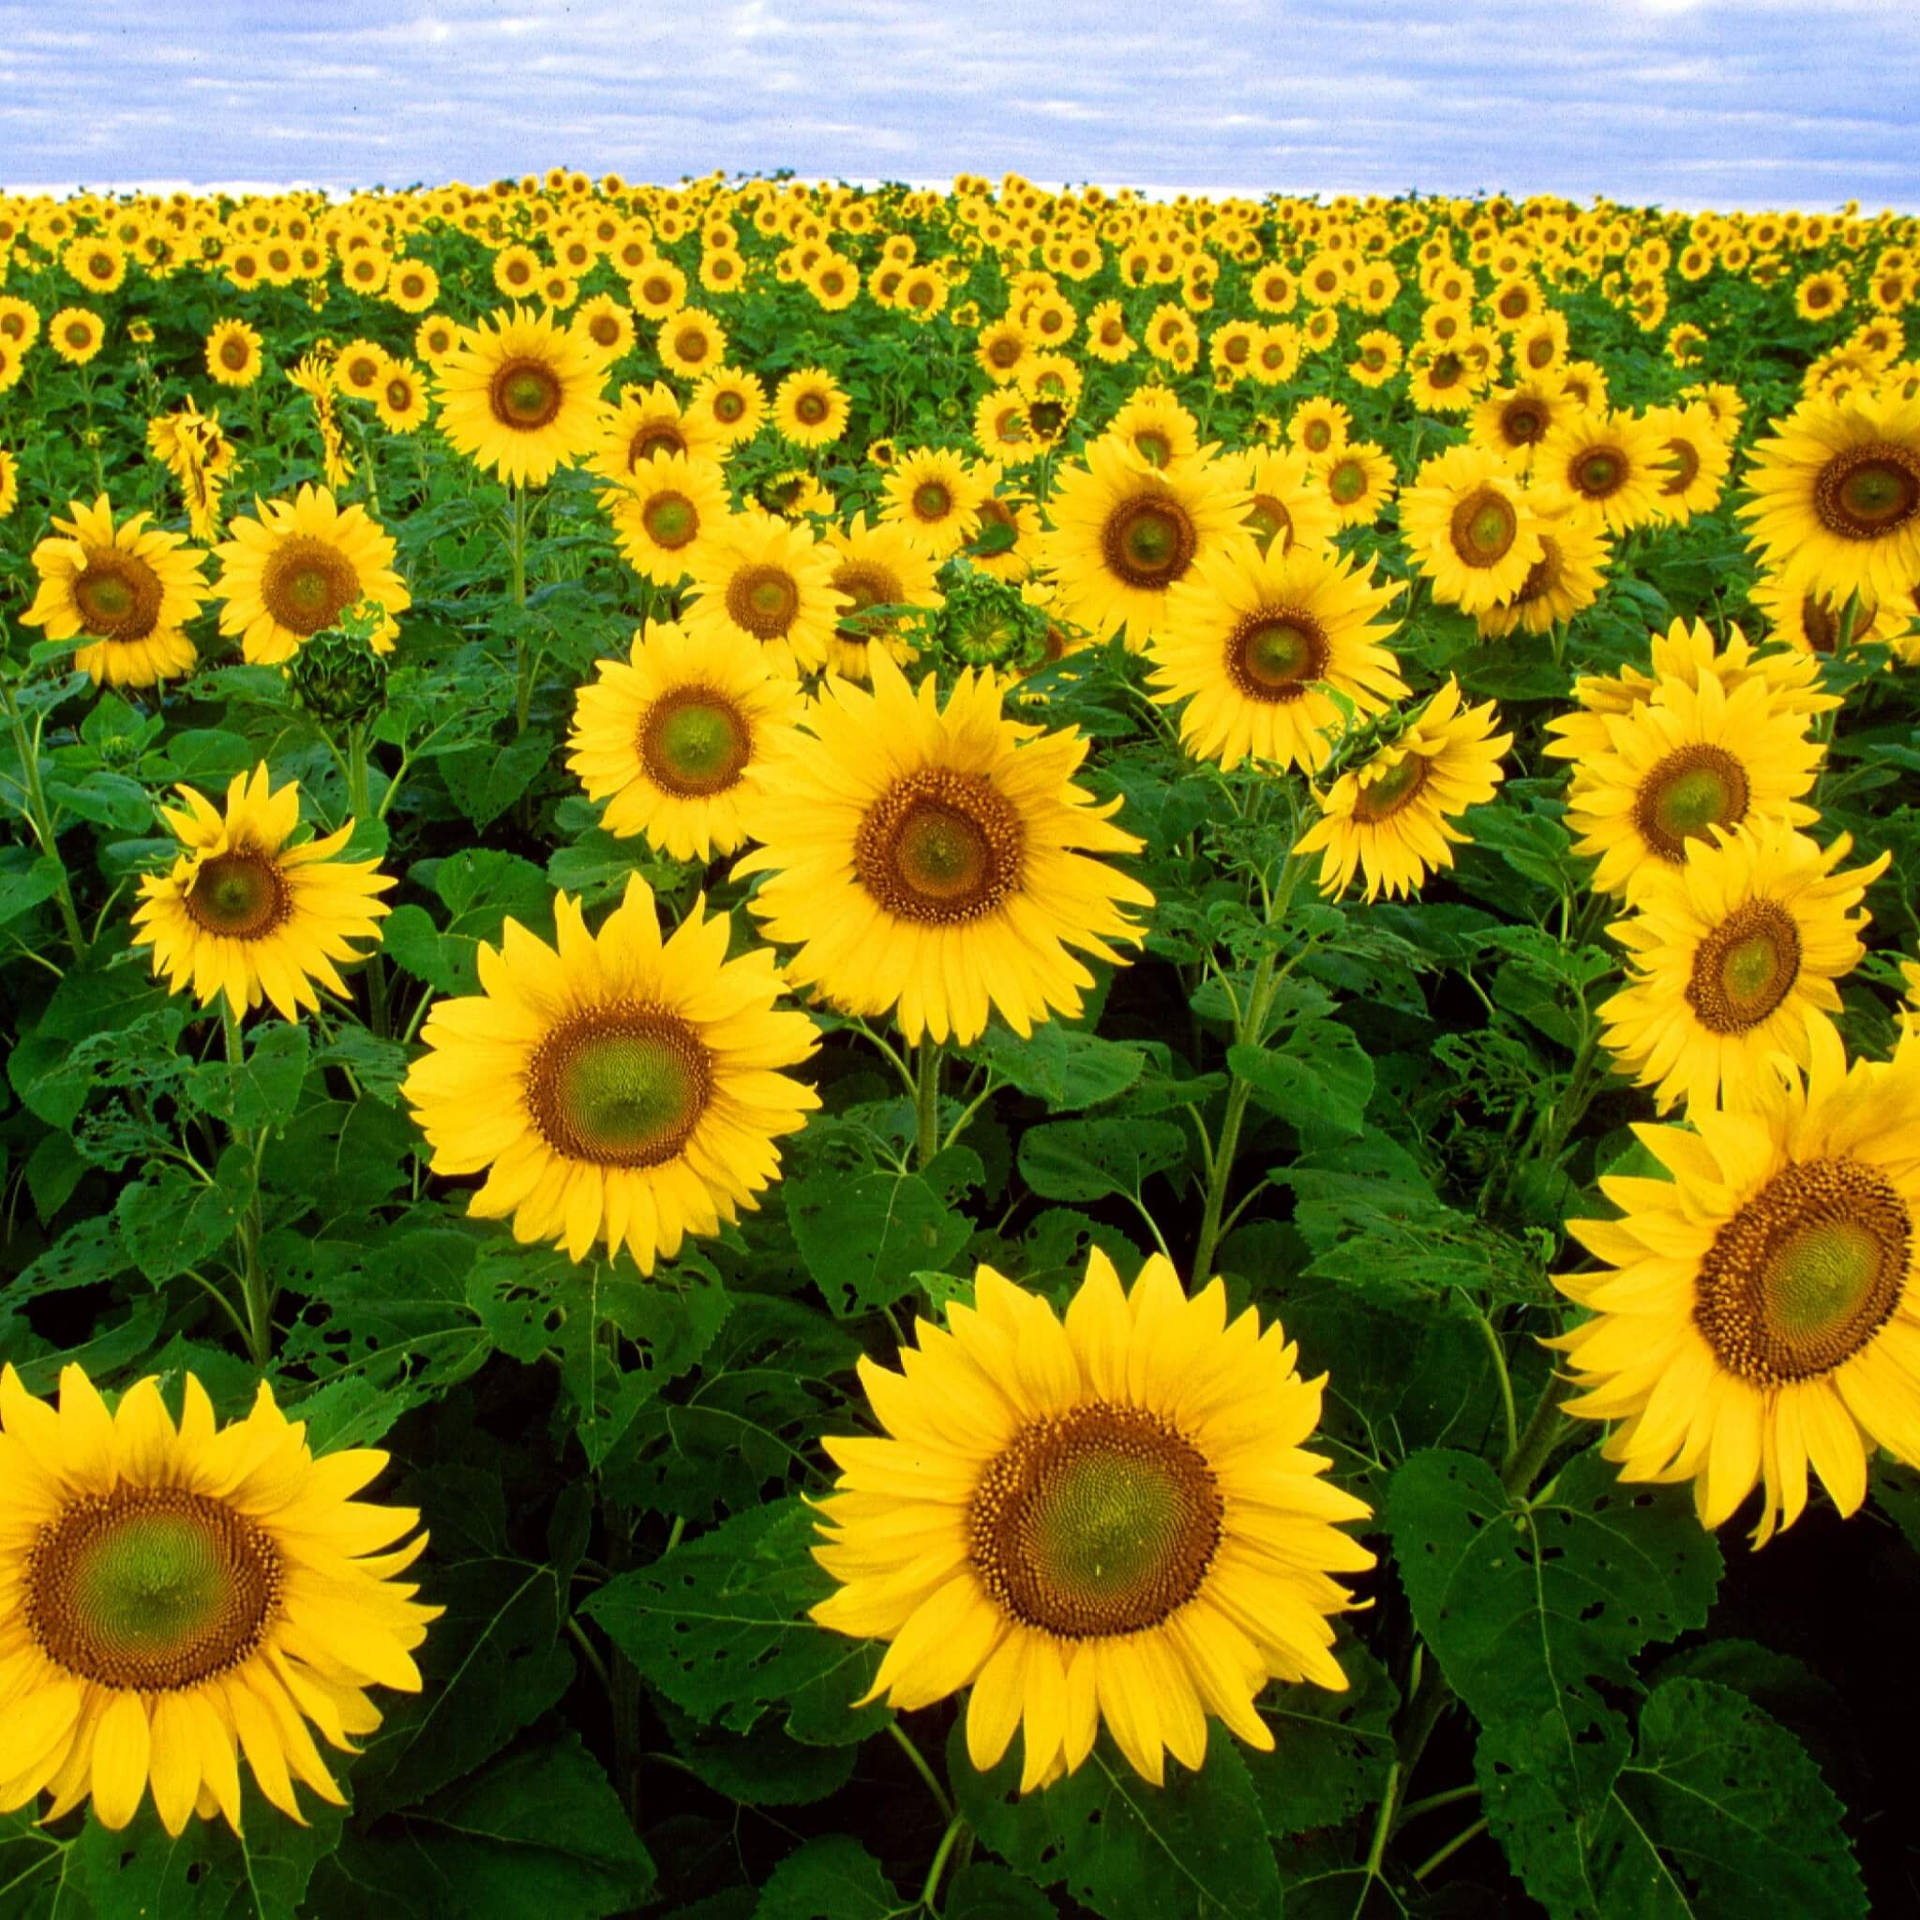 Sunflower field image wallpaper.